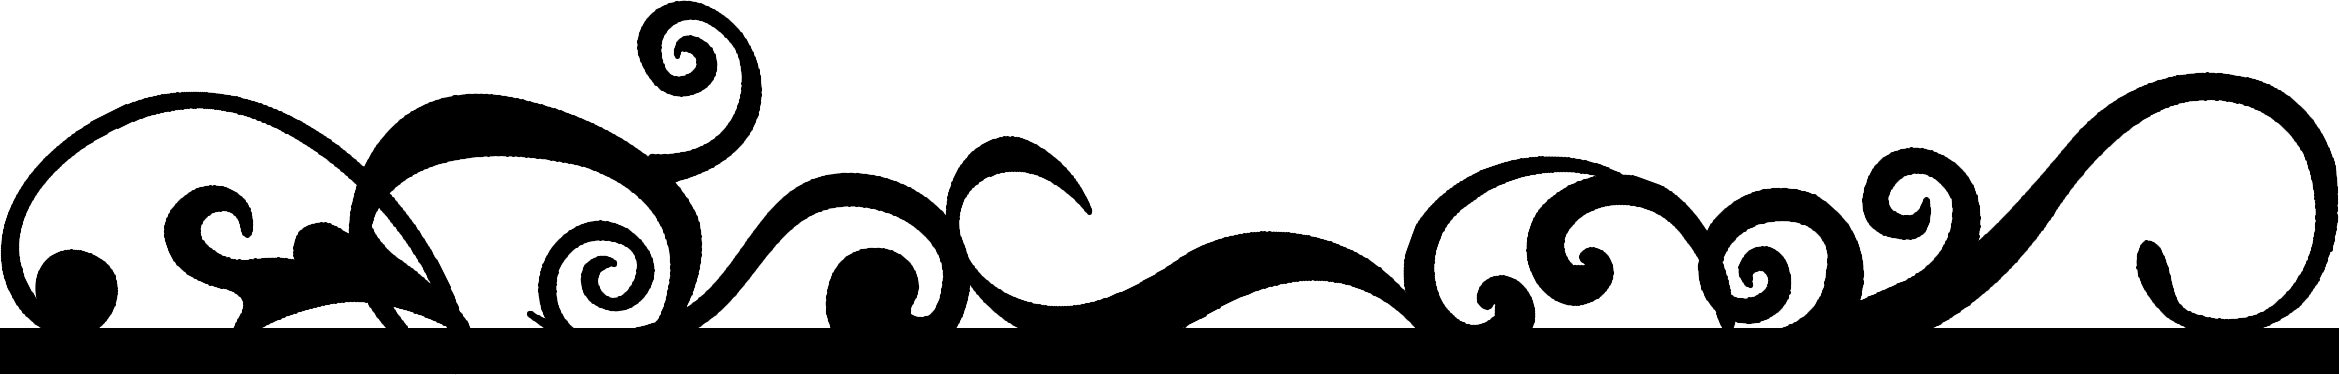 Black Swirl Logo - Free Black Swirl Border, Download Free Clip Art, Free Clip Art on ...